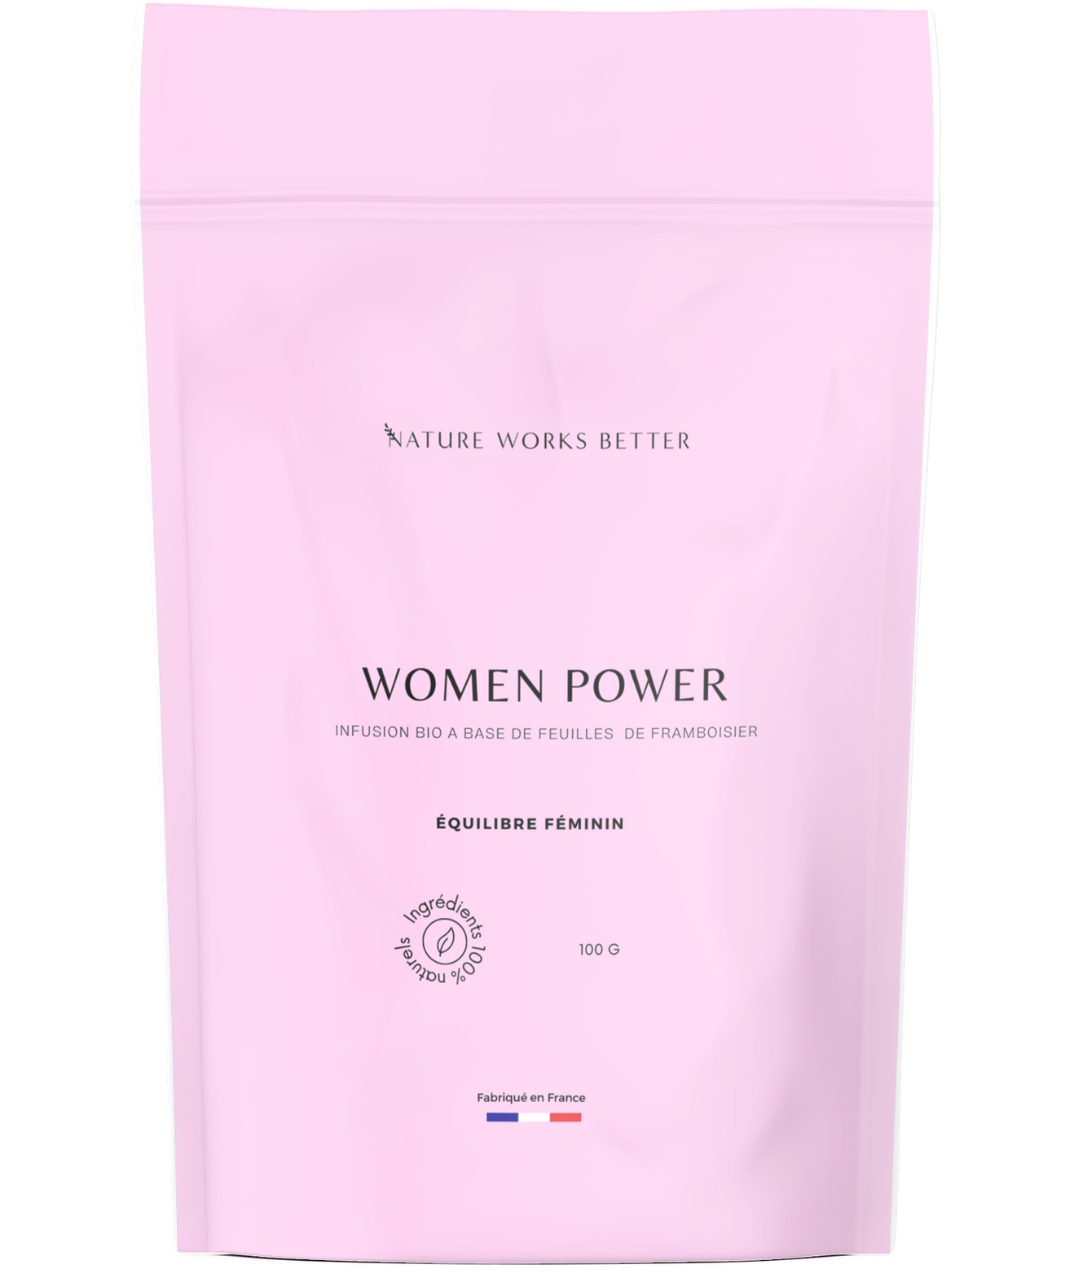 Women Power - Infusion bio